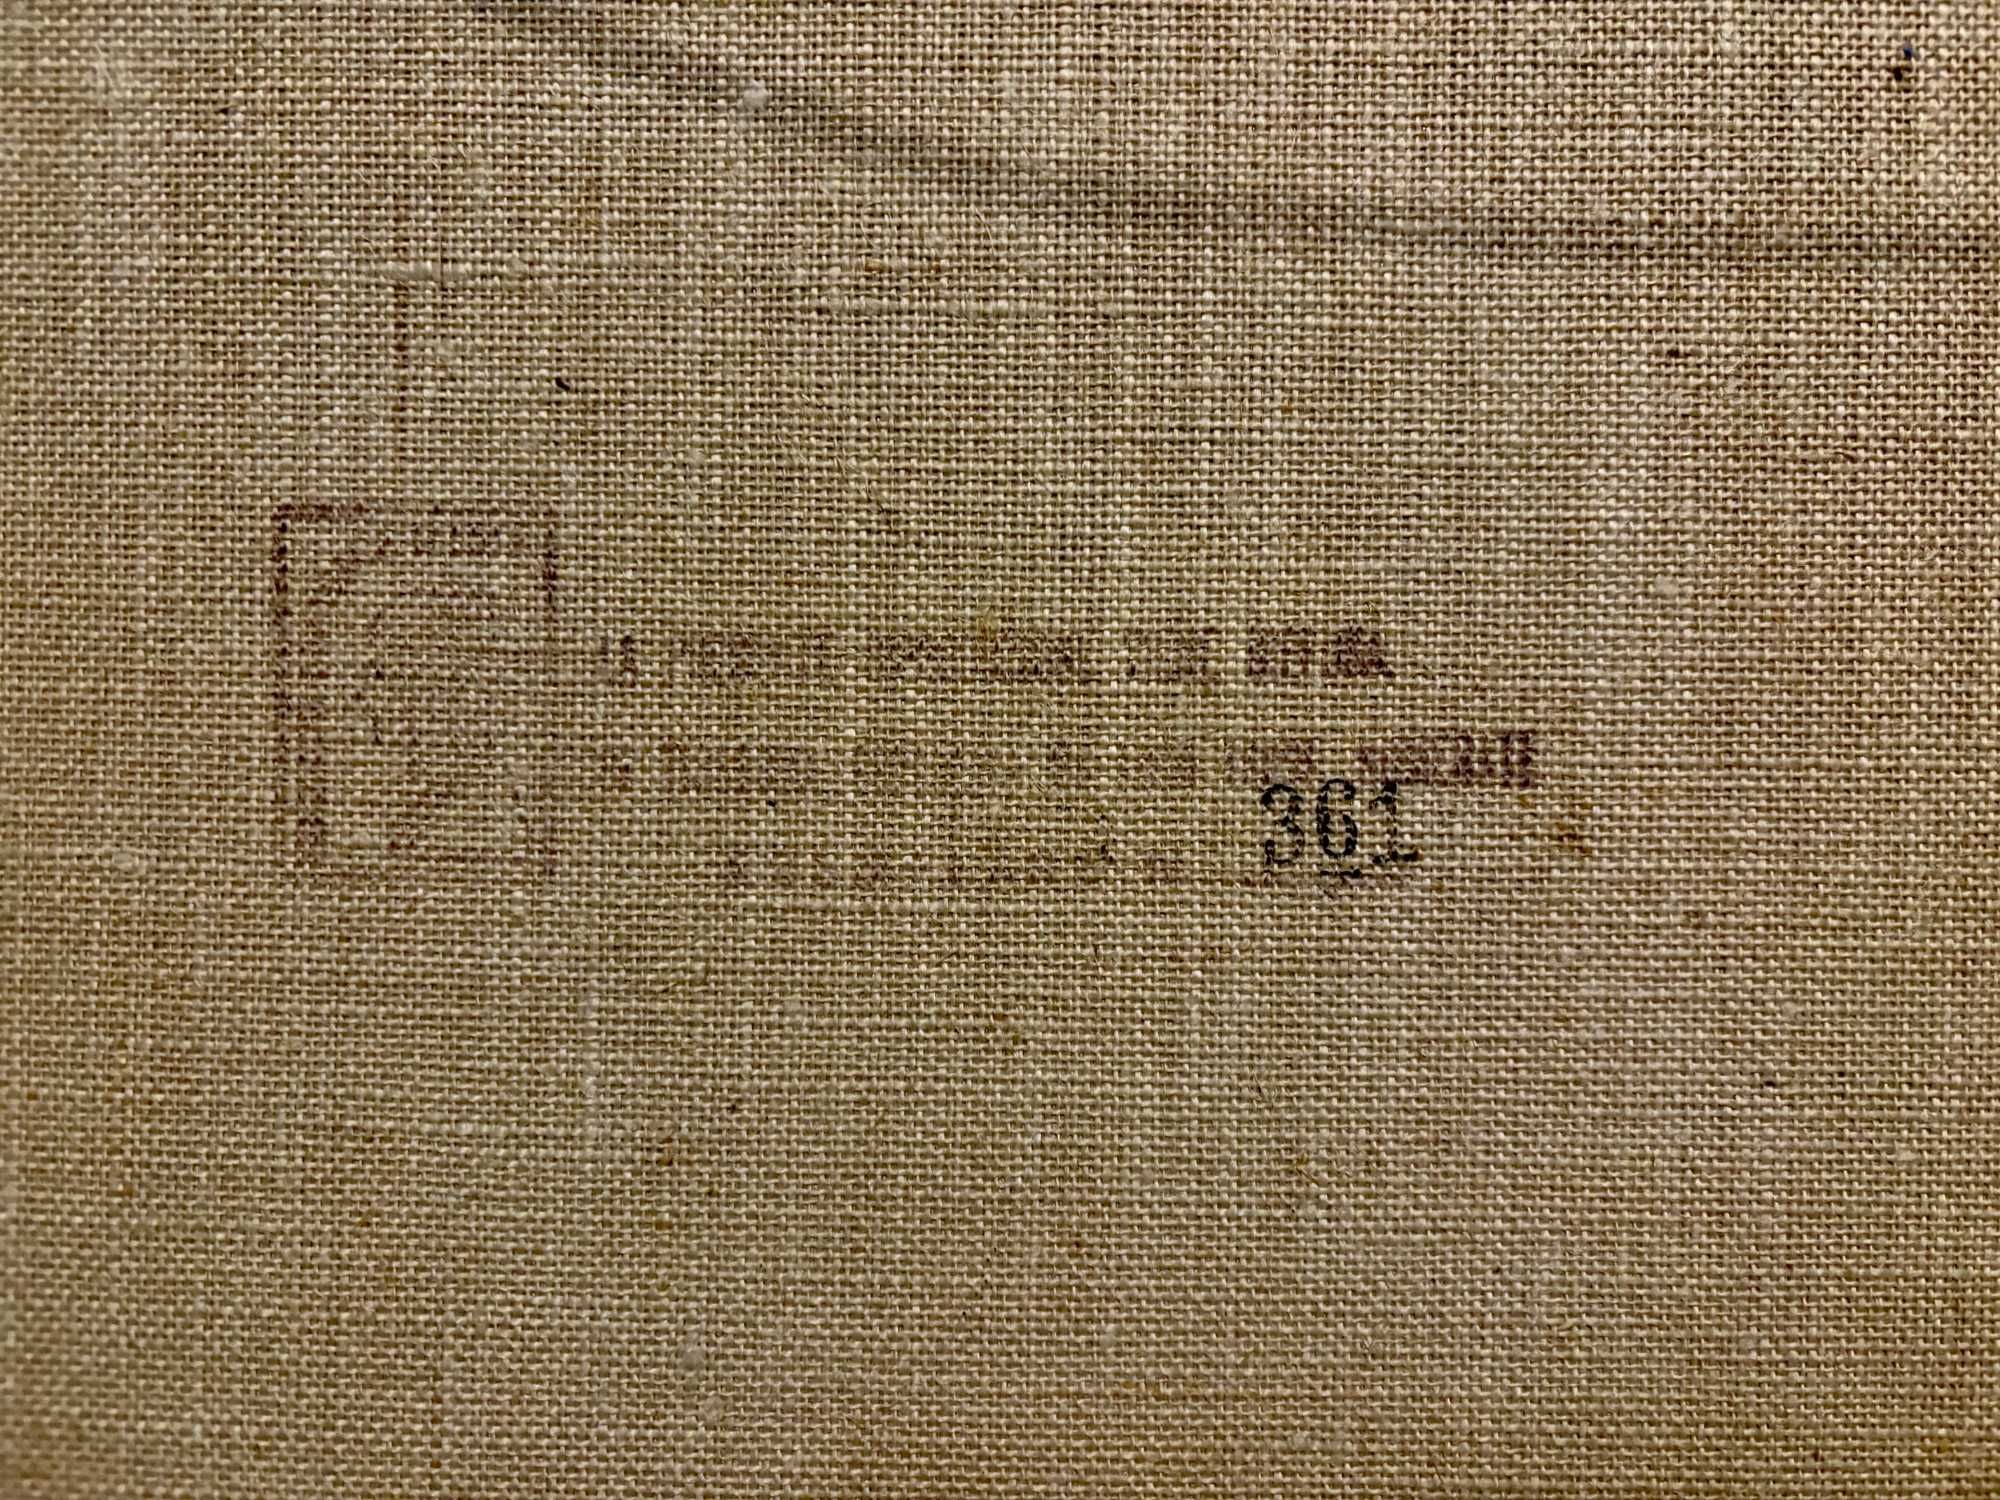 Obraz: A.Sisley, b. duża, numerowana reprodukcja na płótnie, 83x63